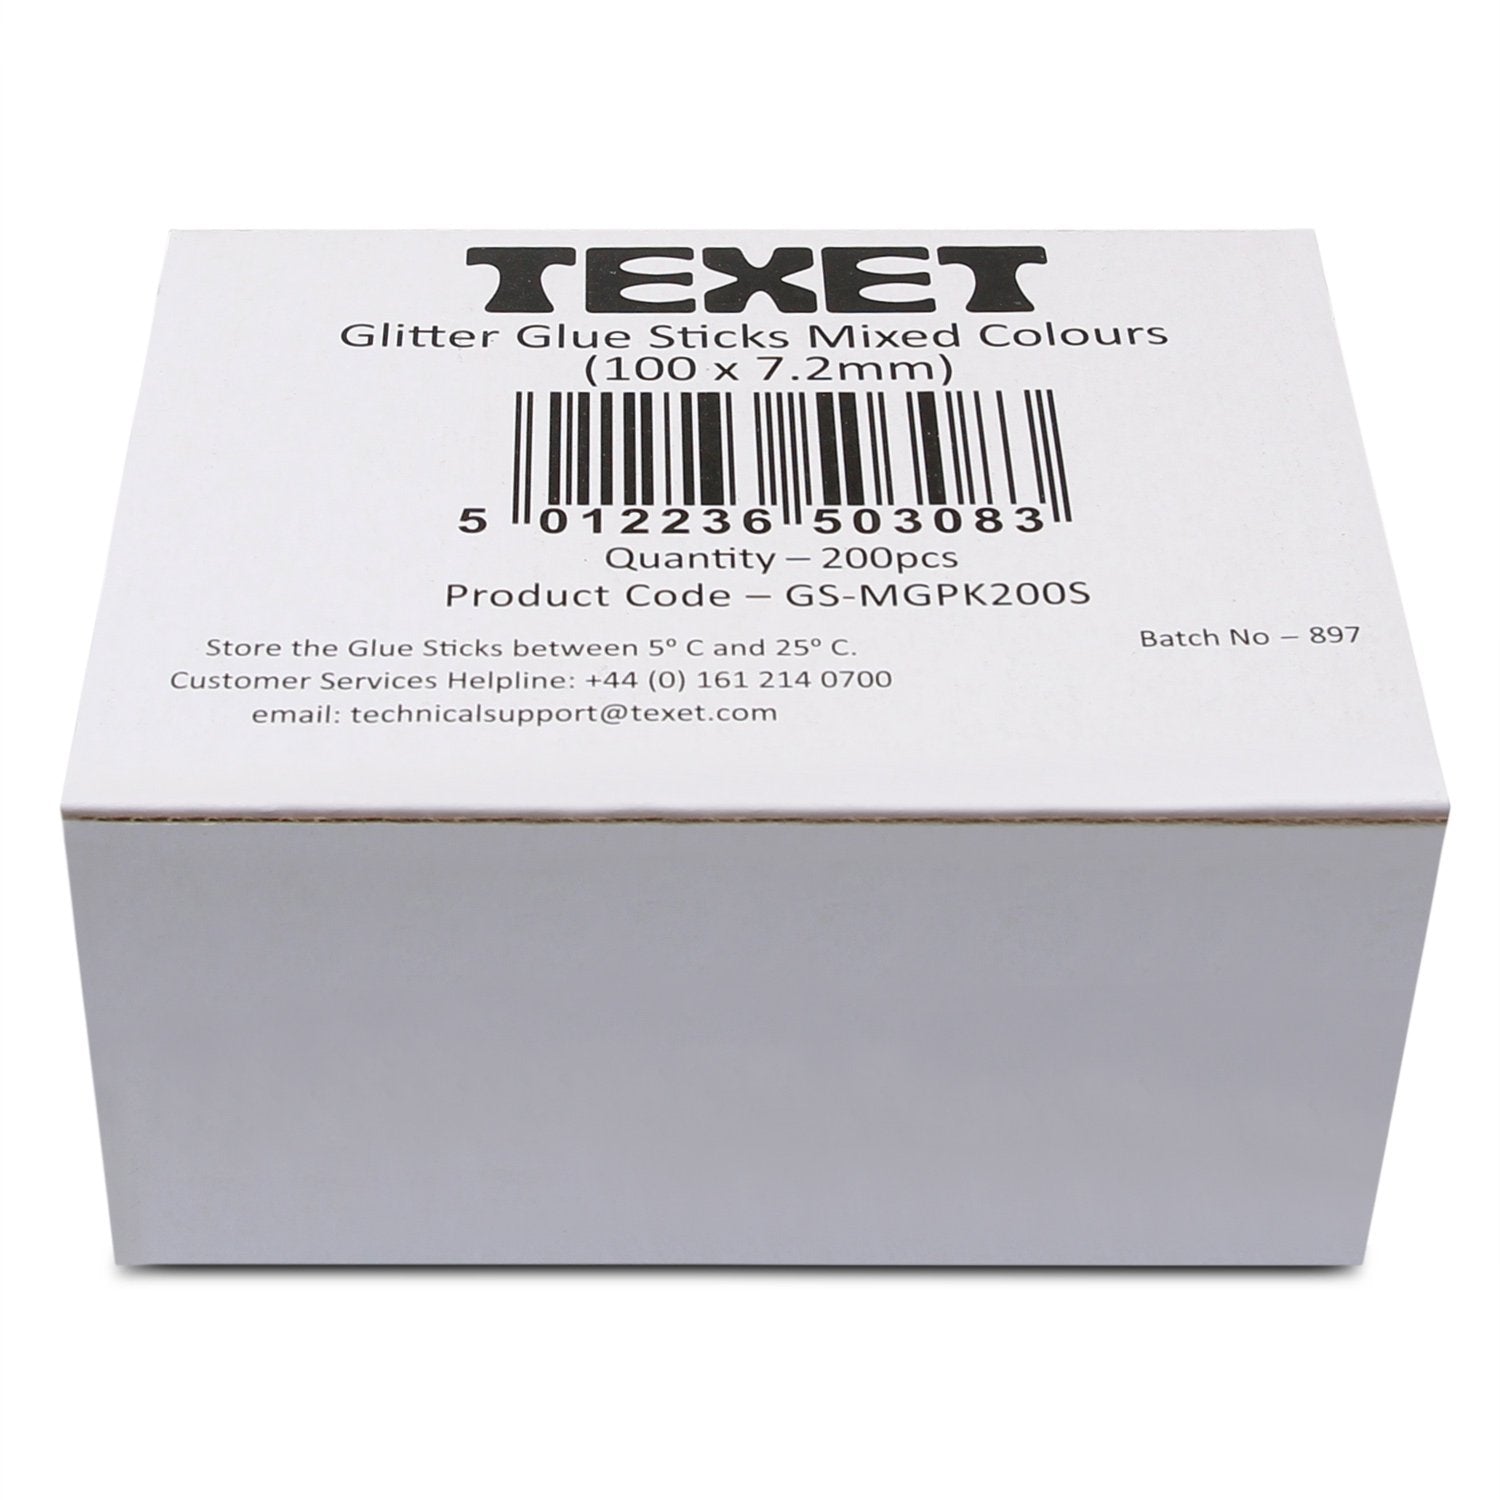 Glitter Glue Sticks Mixed Colours 200PK Size 100 x 7.2mm